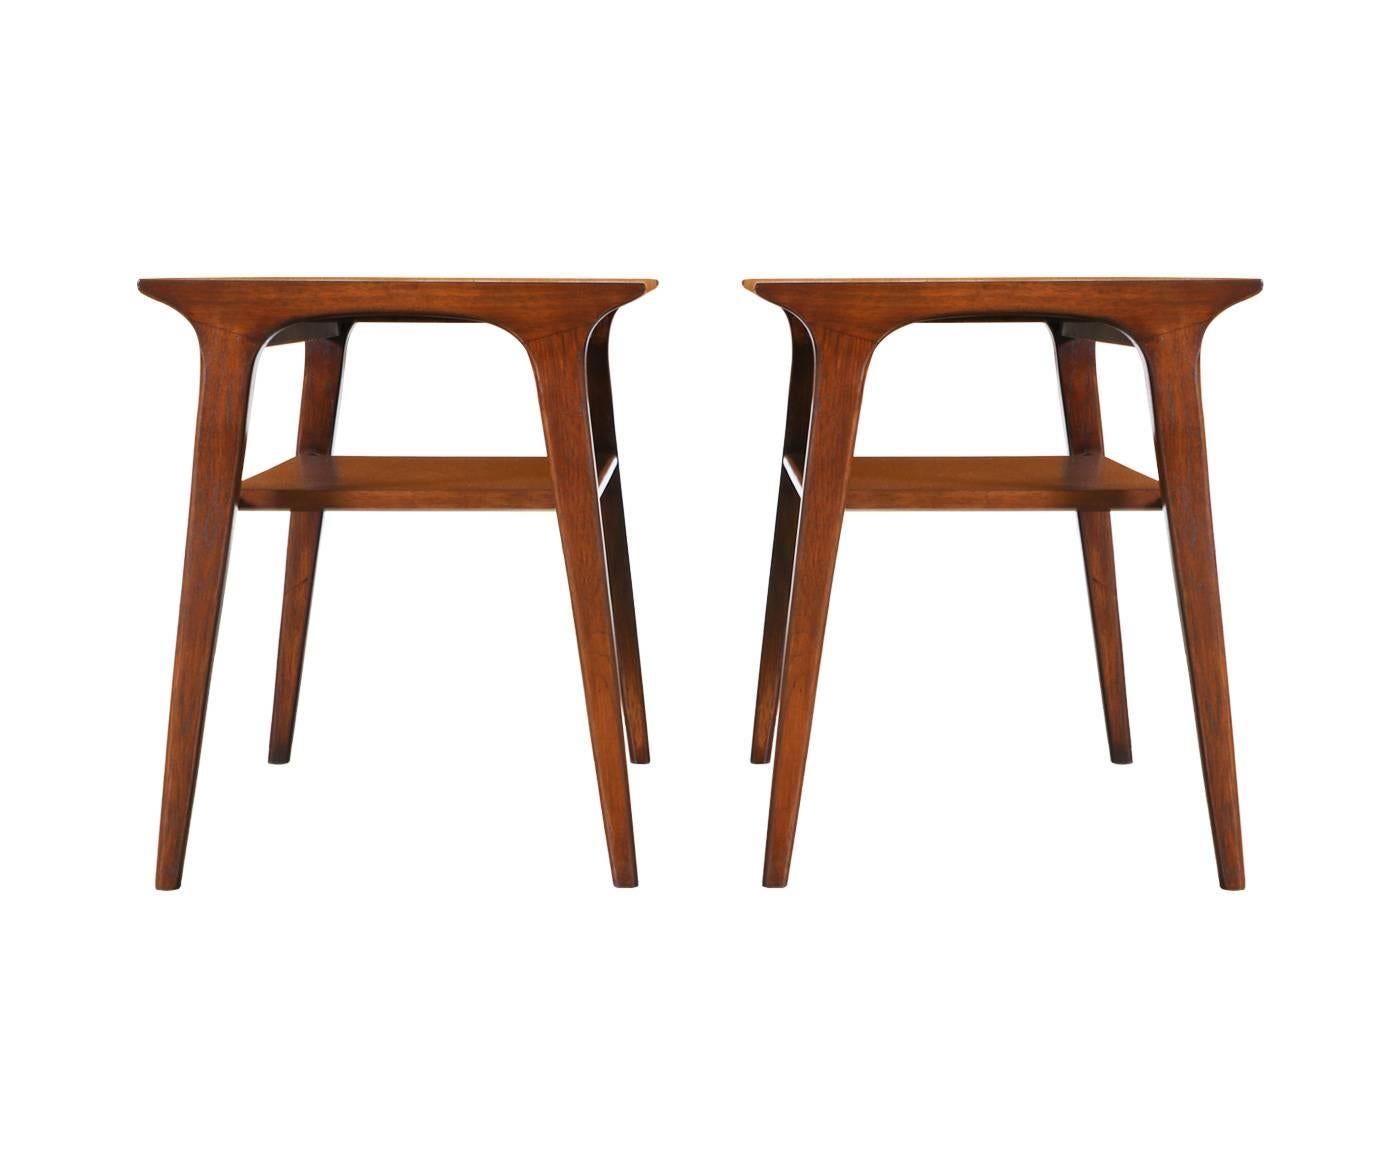 Mid-Century Modern John Van Koert “Profile” Side Tables with Travertine Tops for Drexel